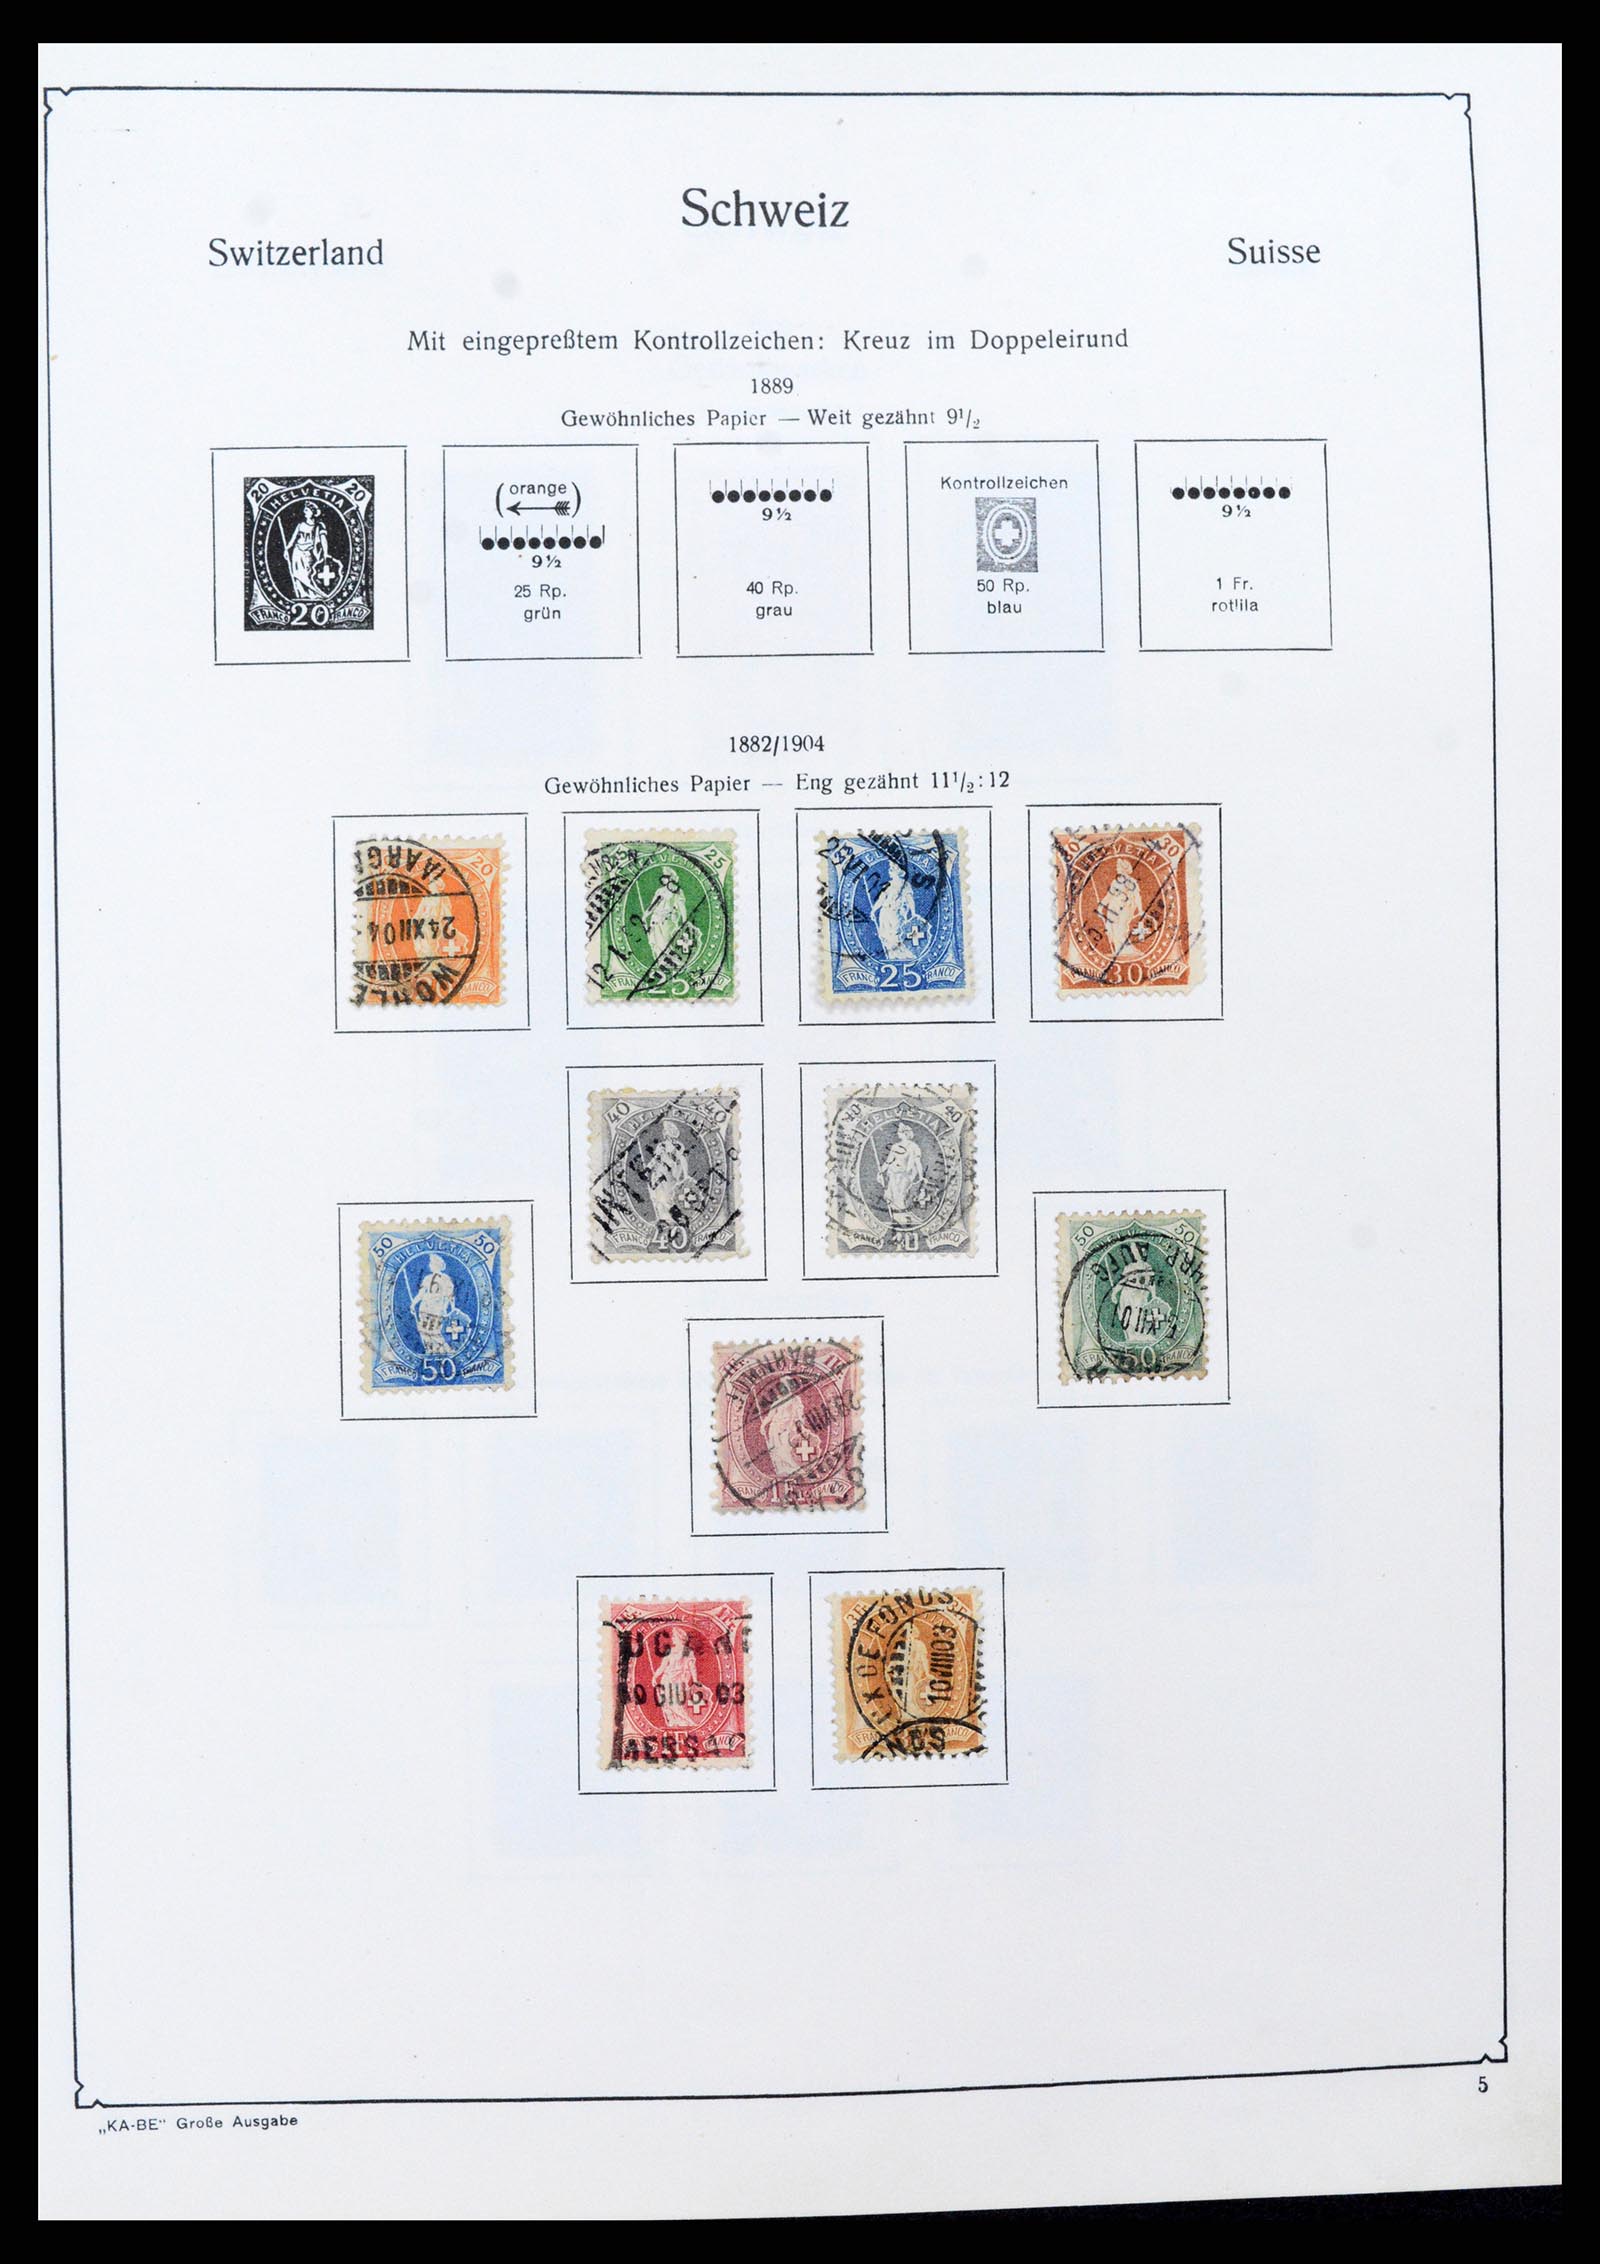 37588 004 - Stamp collection 37588 Switzerland 1854-1974.